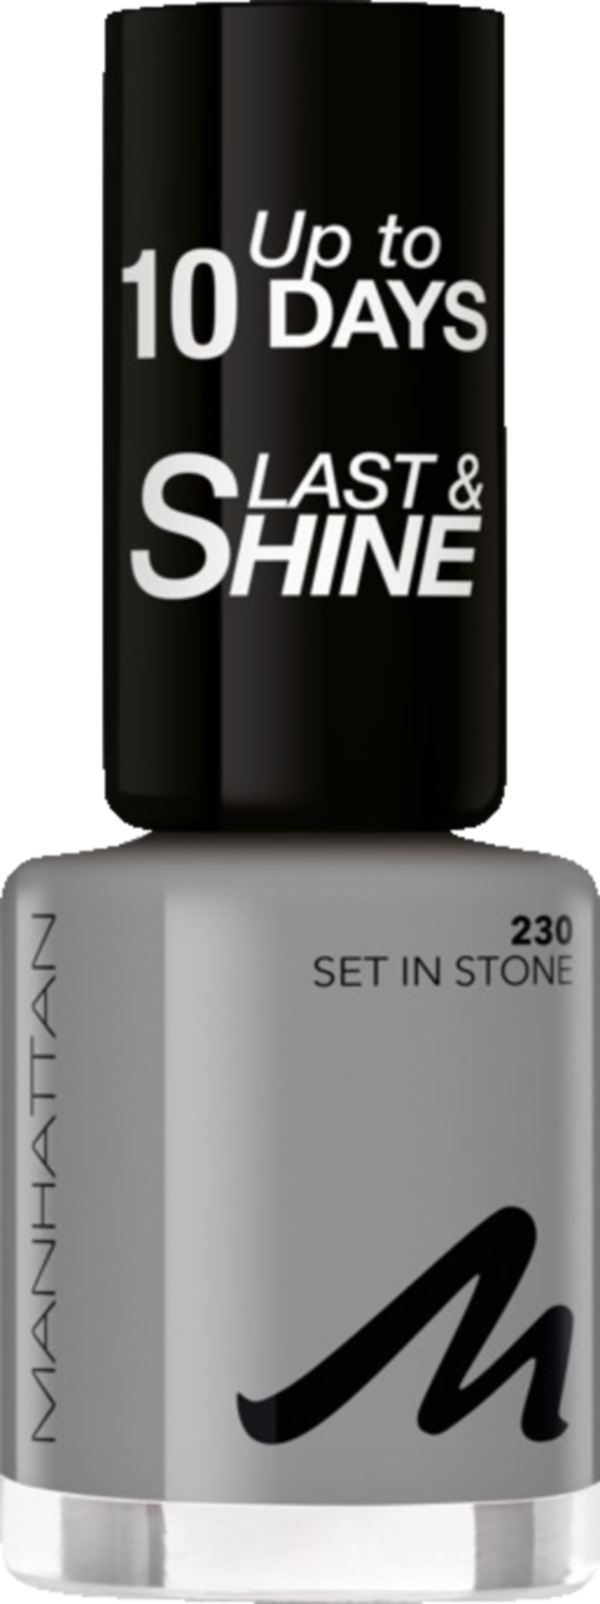 Bild 1 von Manhattan Last & Shine Nail Polish 230 Set In Stone